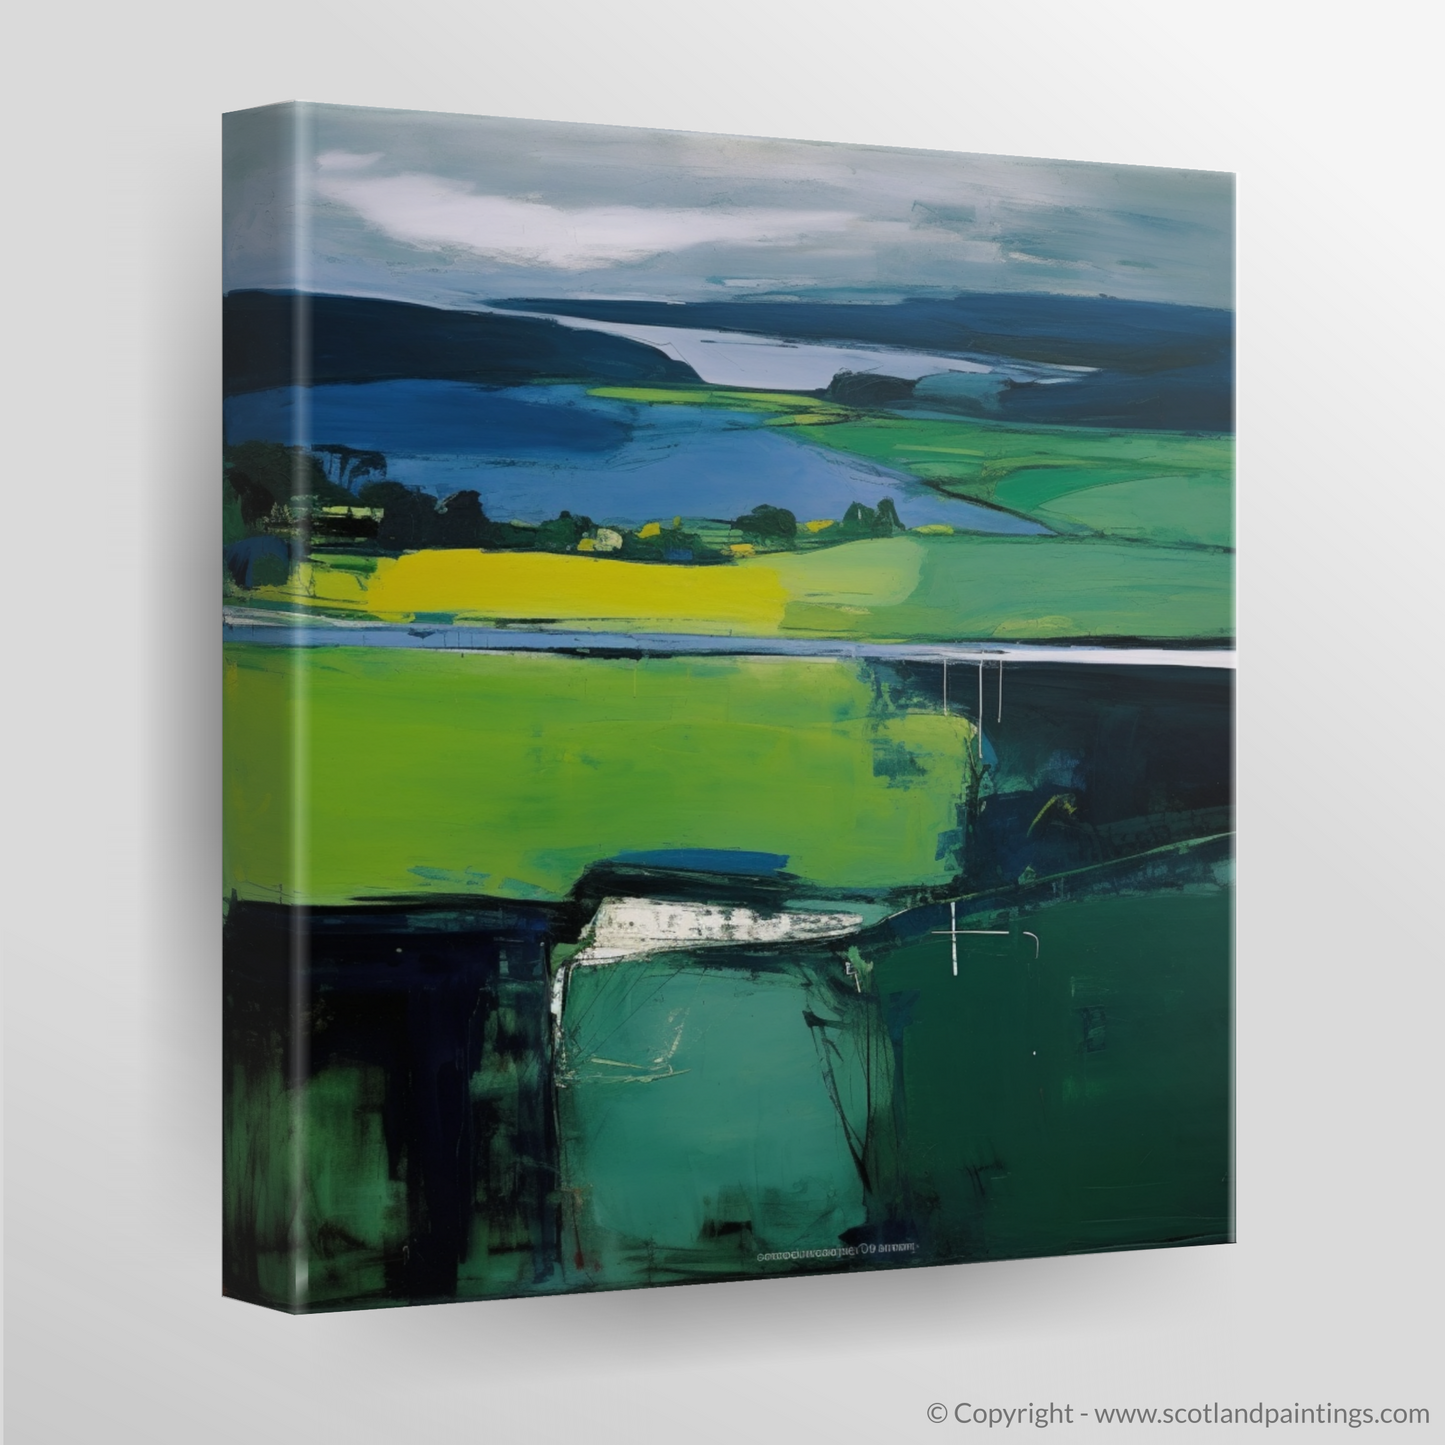 Storm over Loch Spelve: An Abstract Impressionist Interpretation